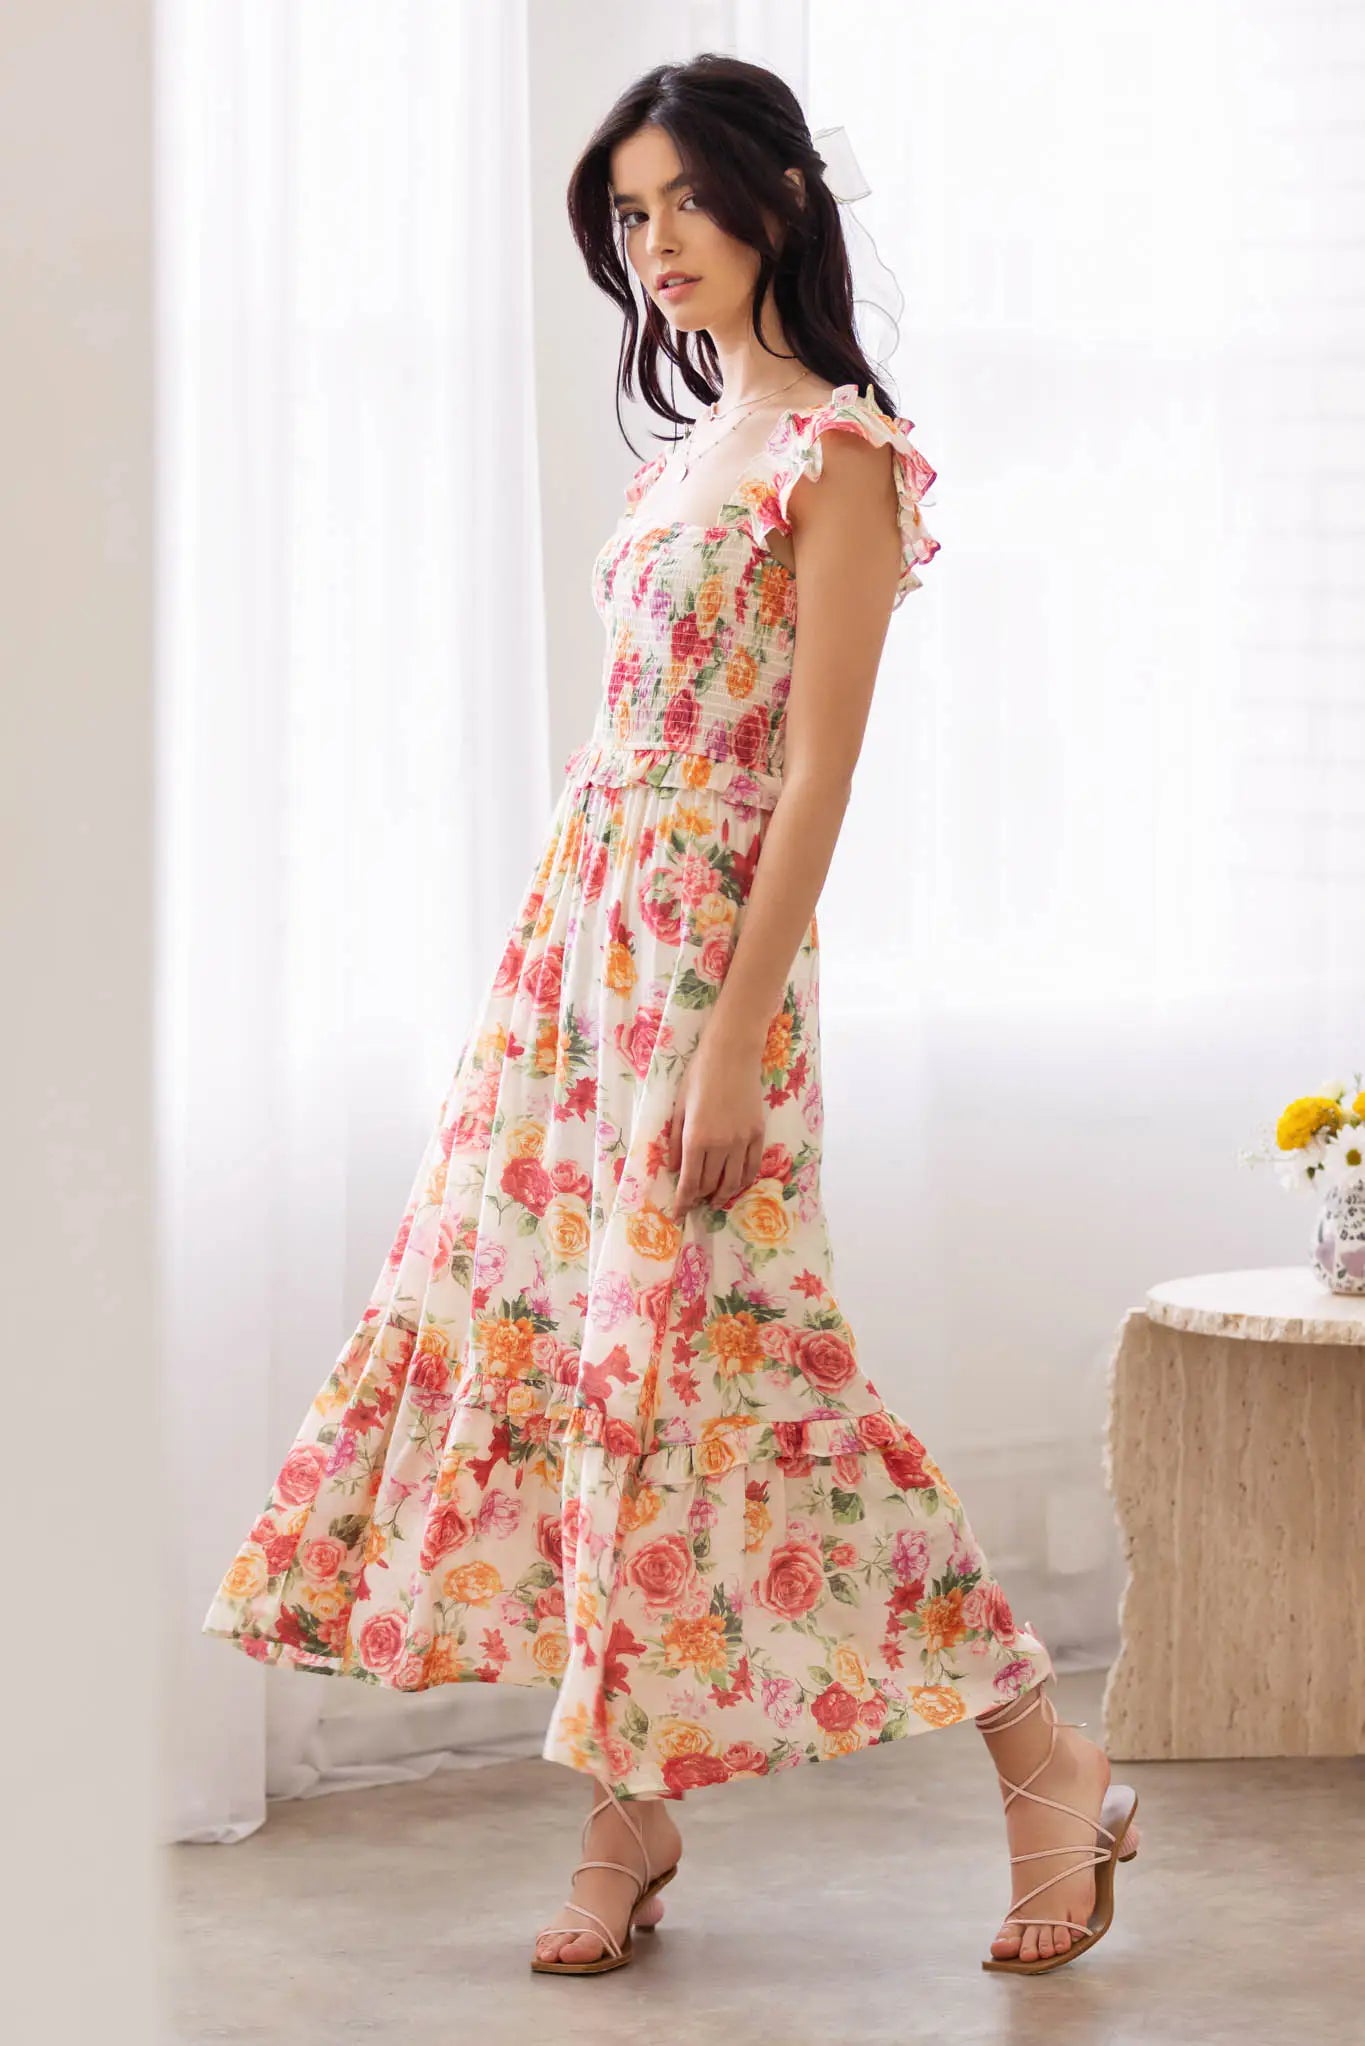 Eleanor Ivory Floral Smocked Dress